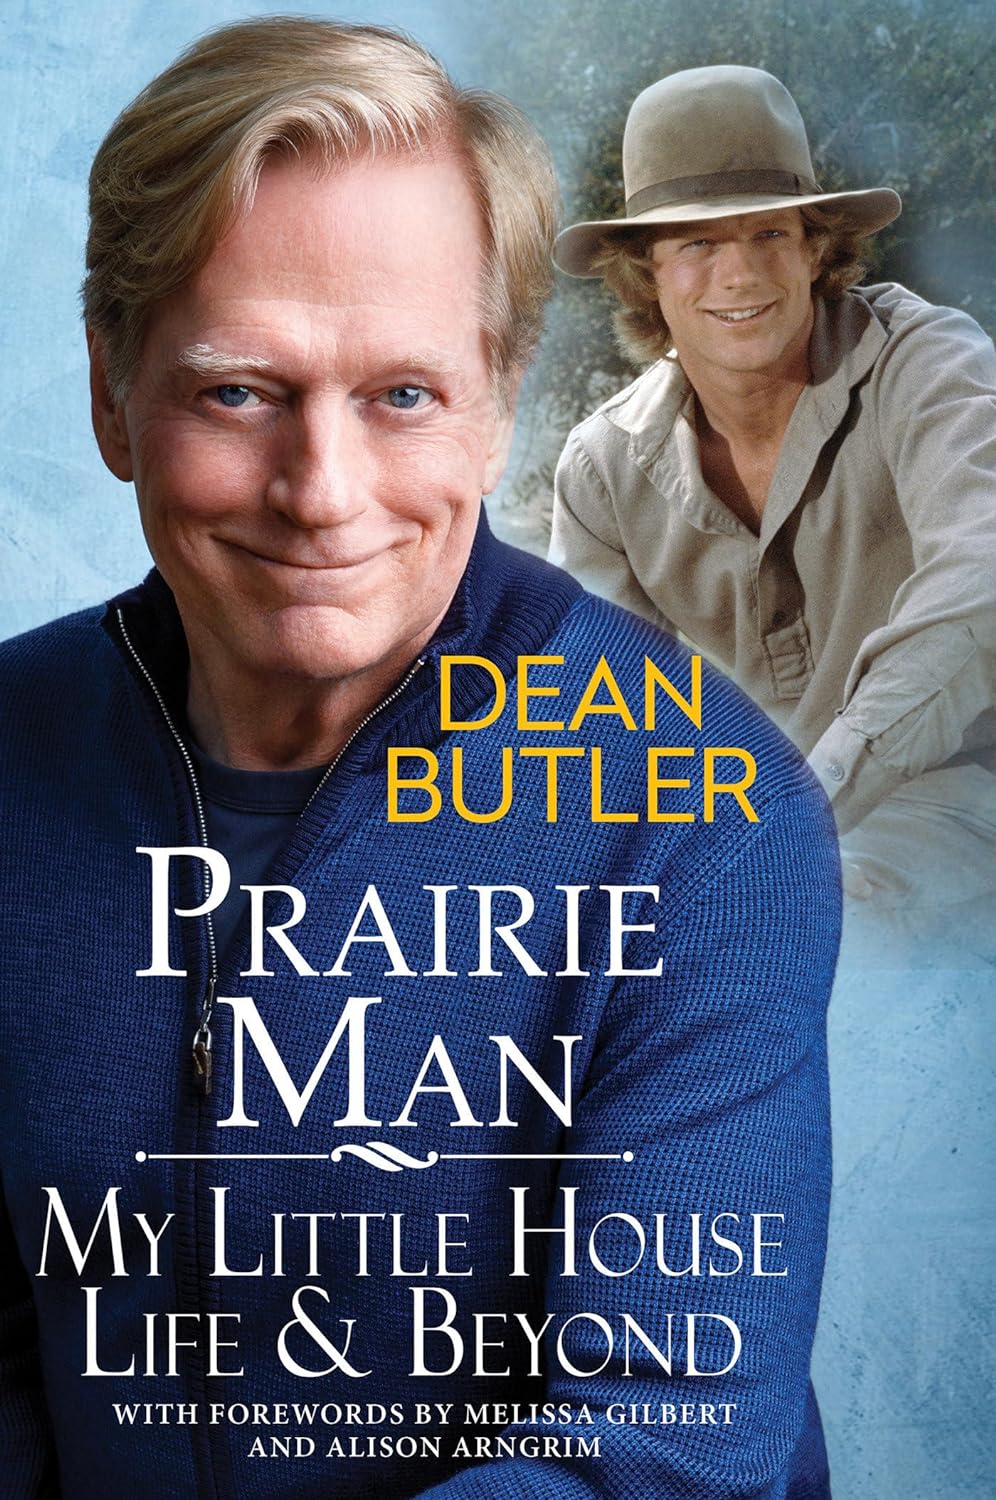 Dean Butler "Prairie Man" book jacket.